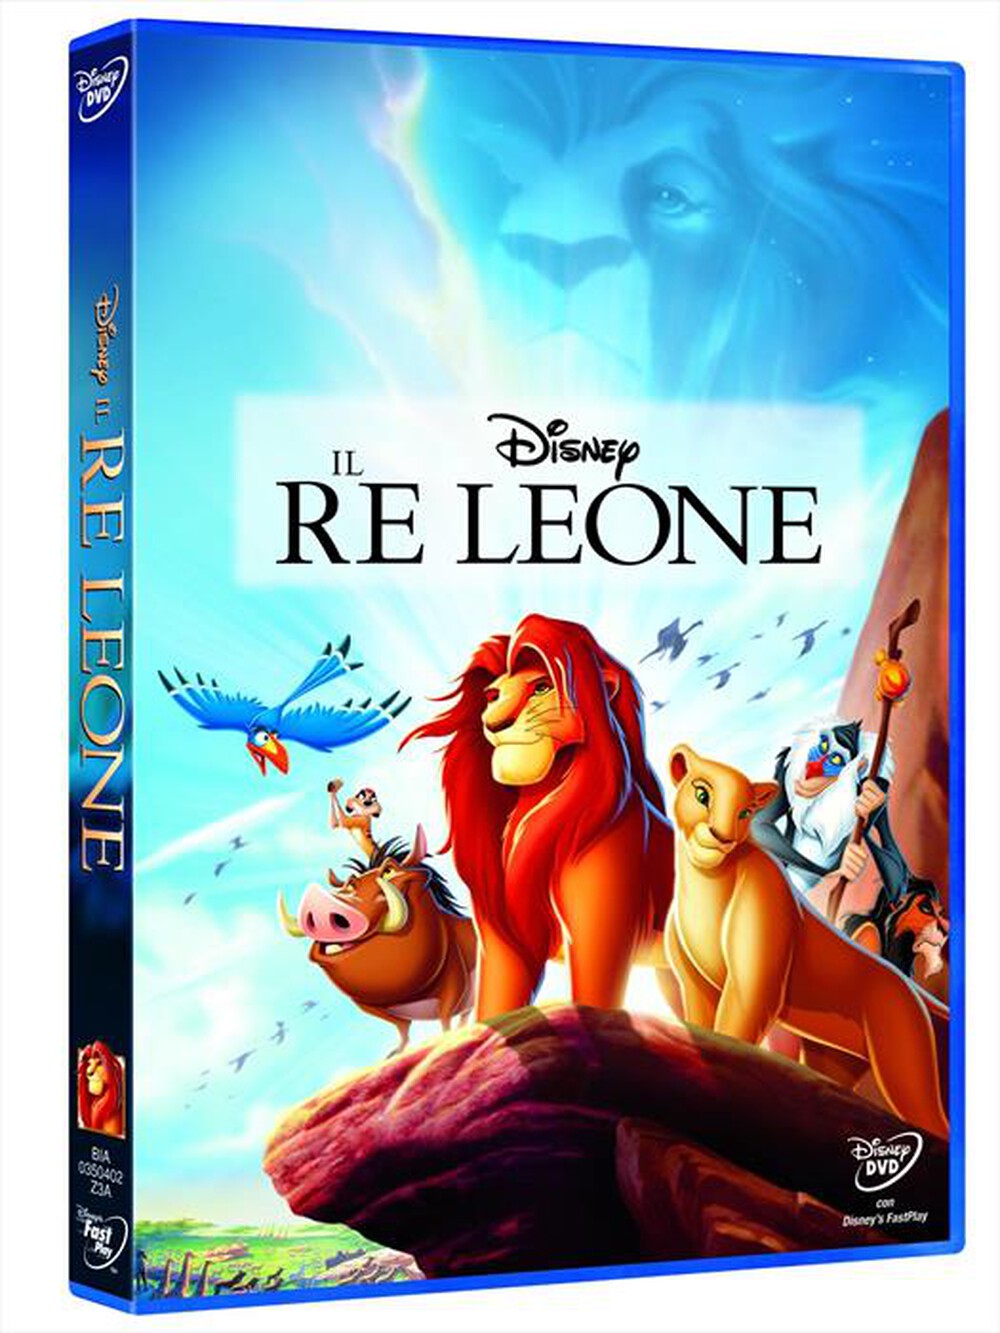 "WALT DISNEY - Re Leone (Il) - "